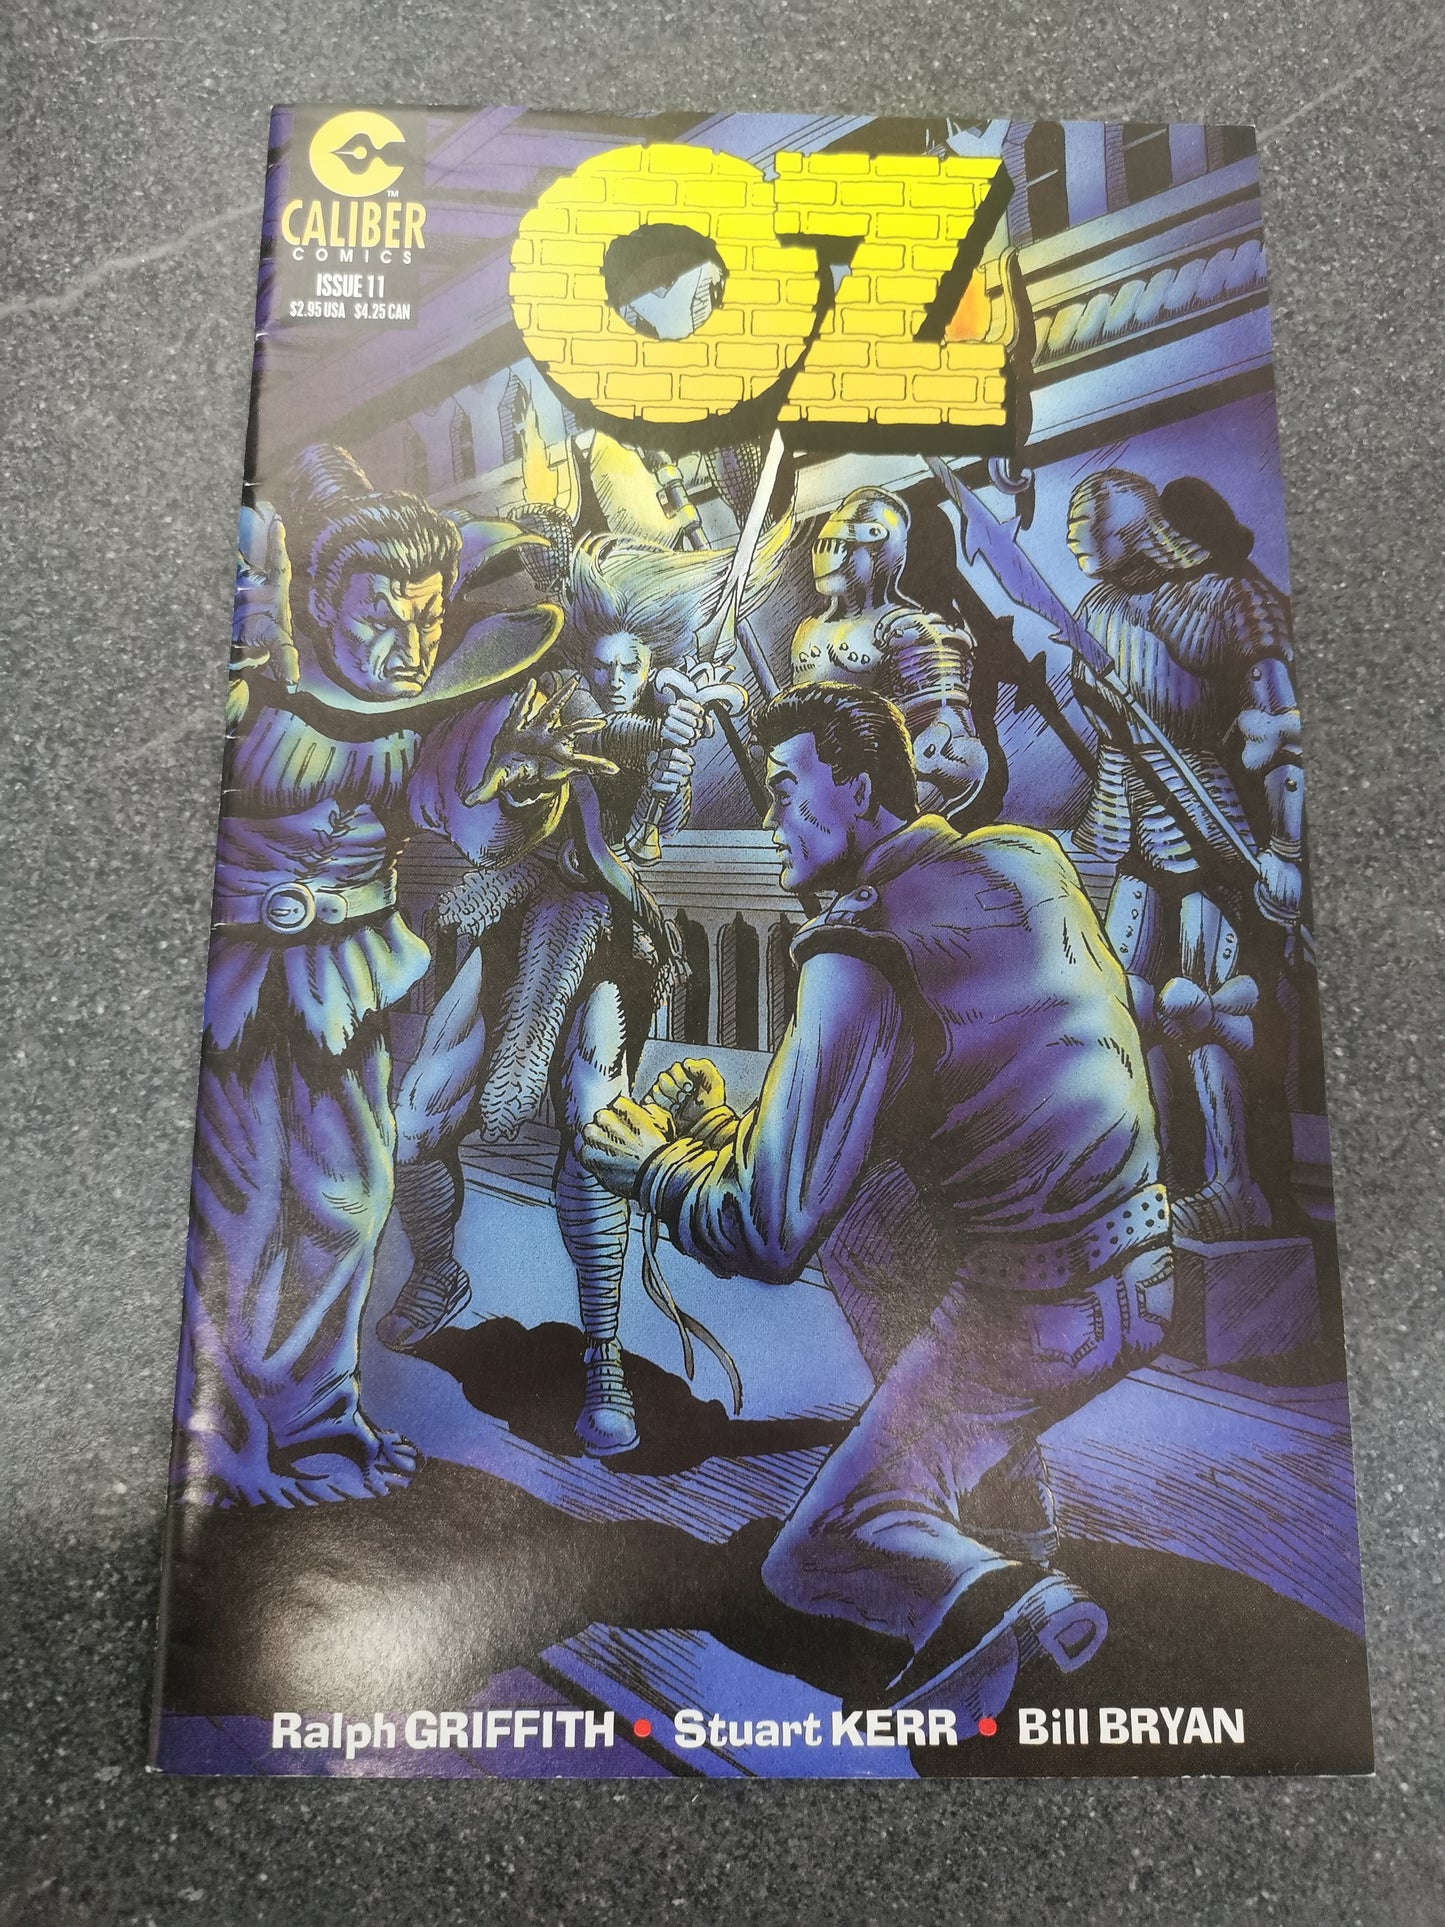 OZ Volume 1 #11 1995 Caliber comic